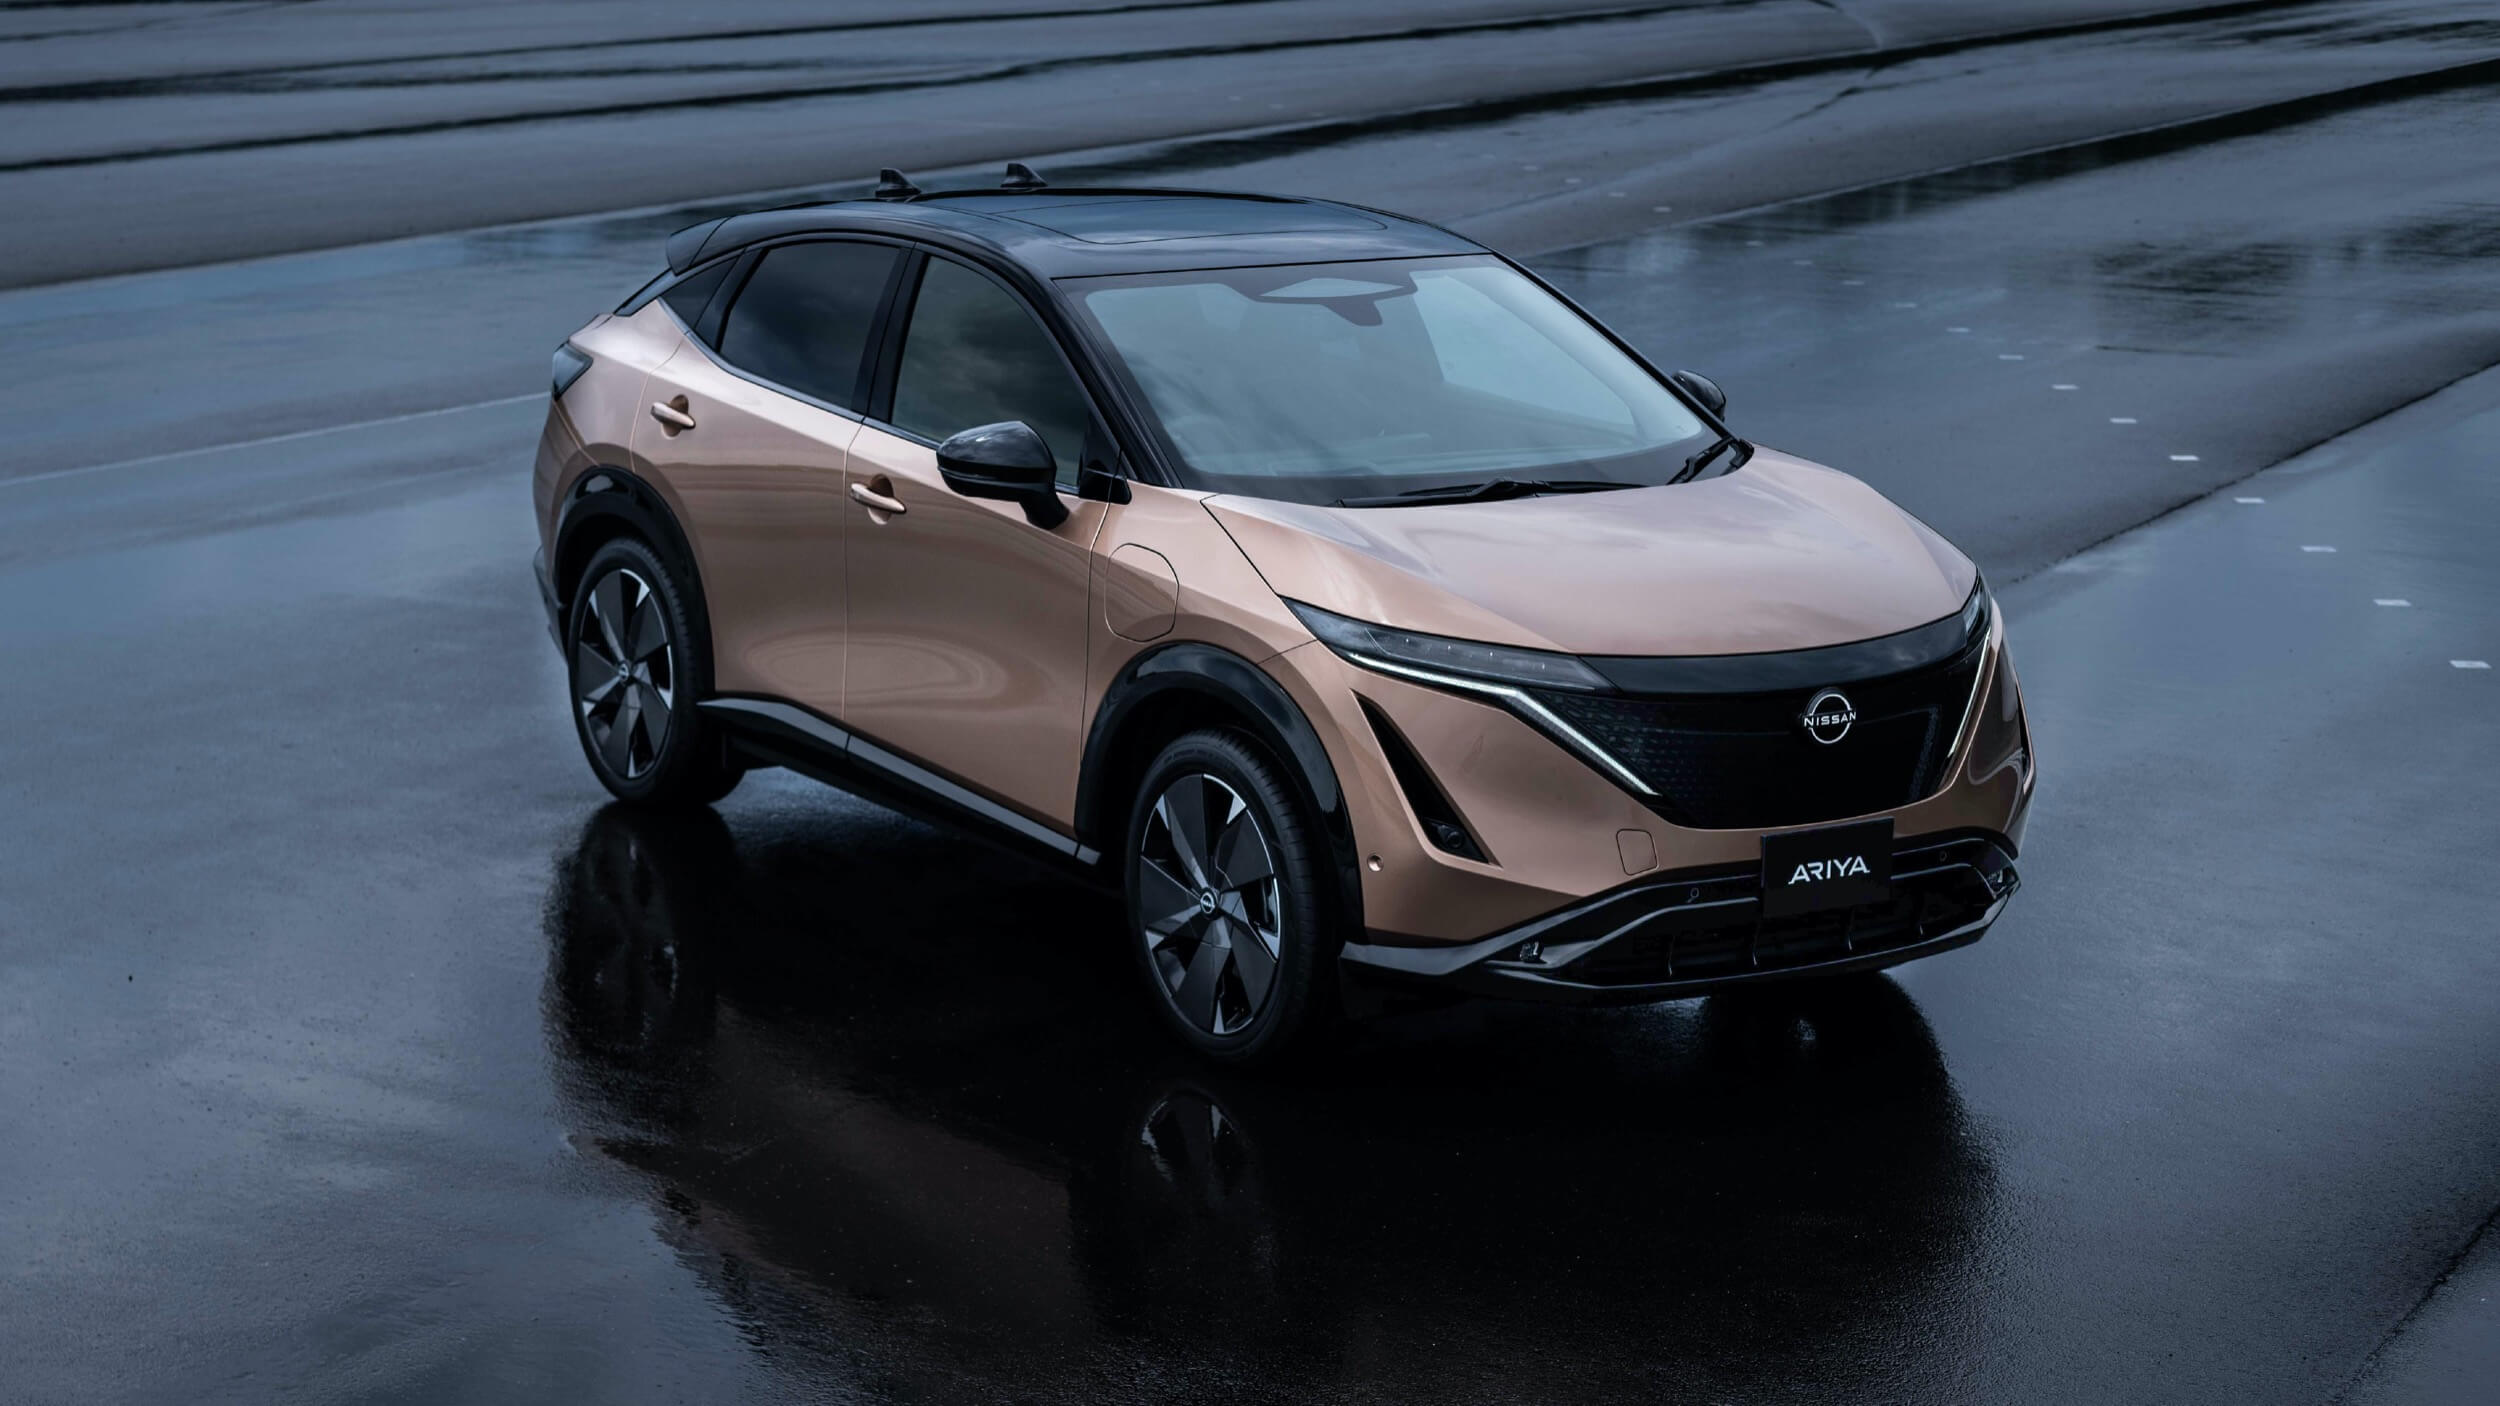 Nissan unveils the futuristic-looking Ariya electric SUV